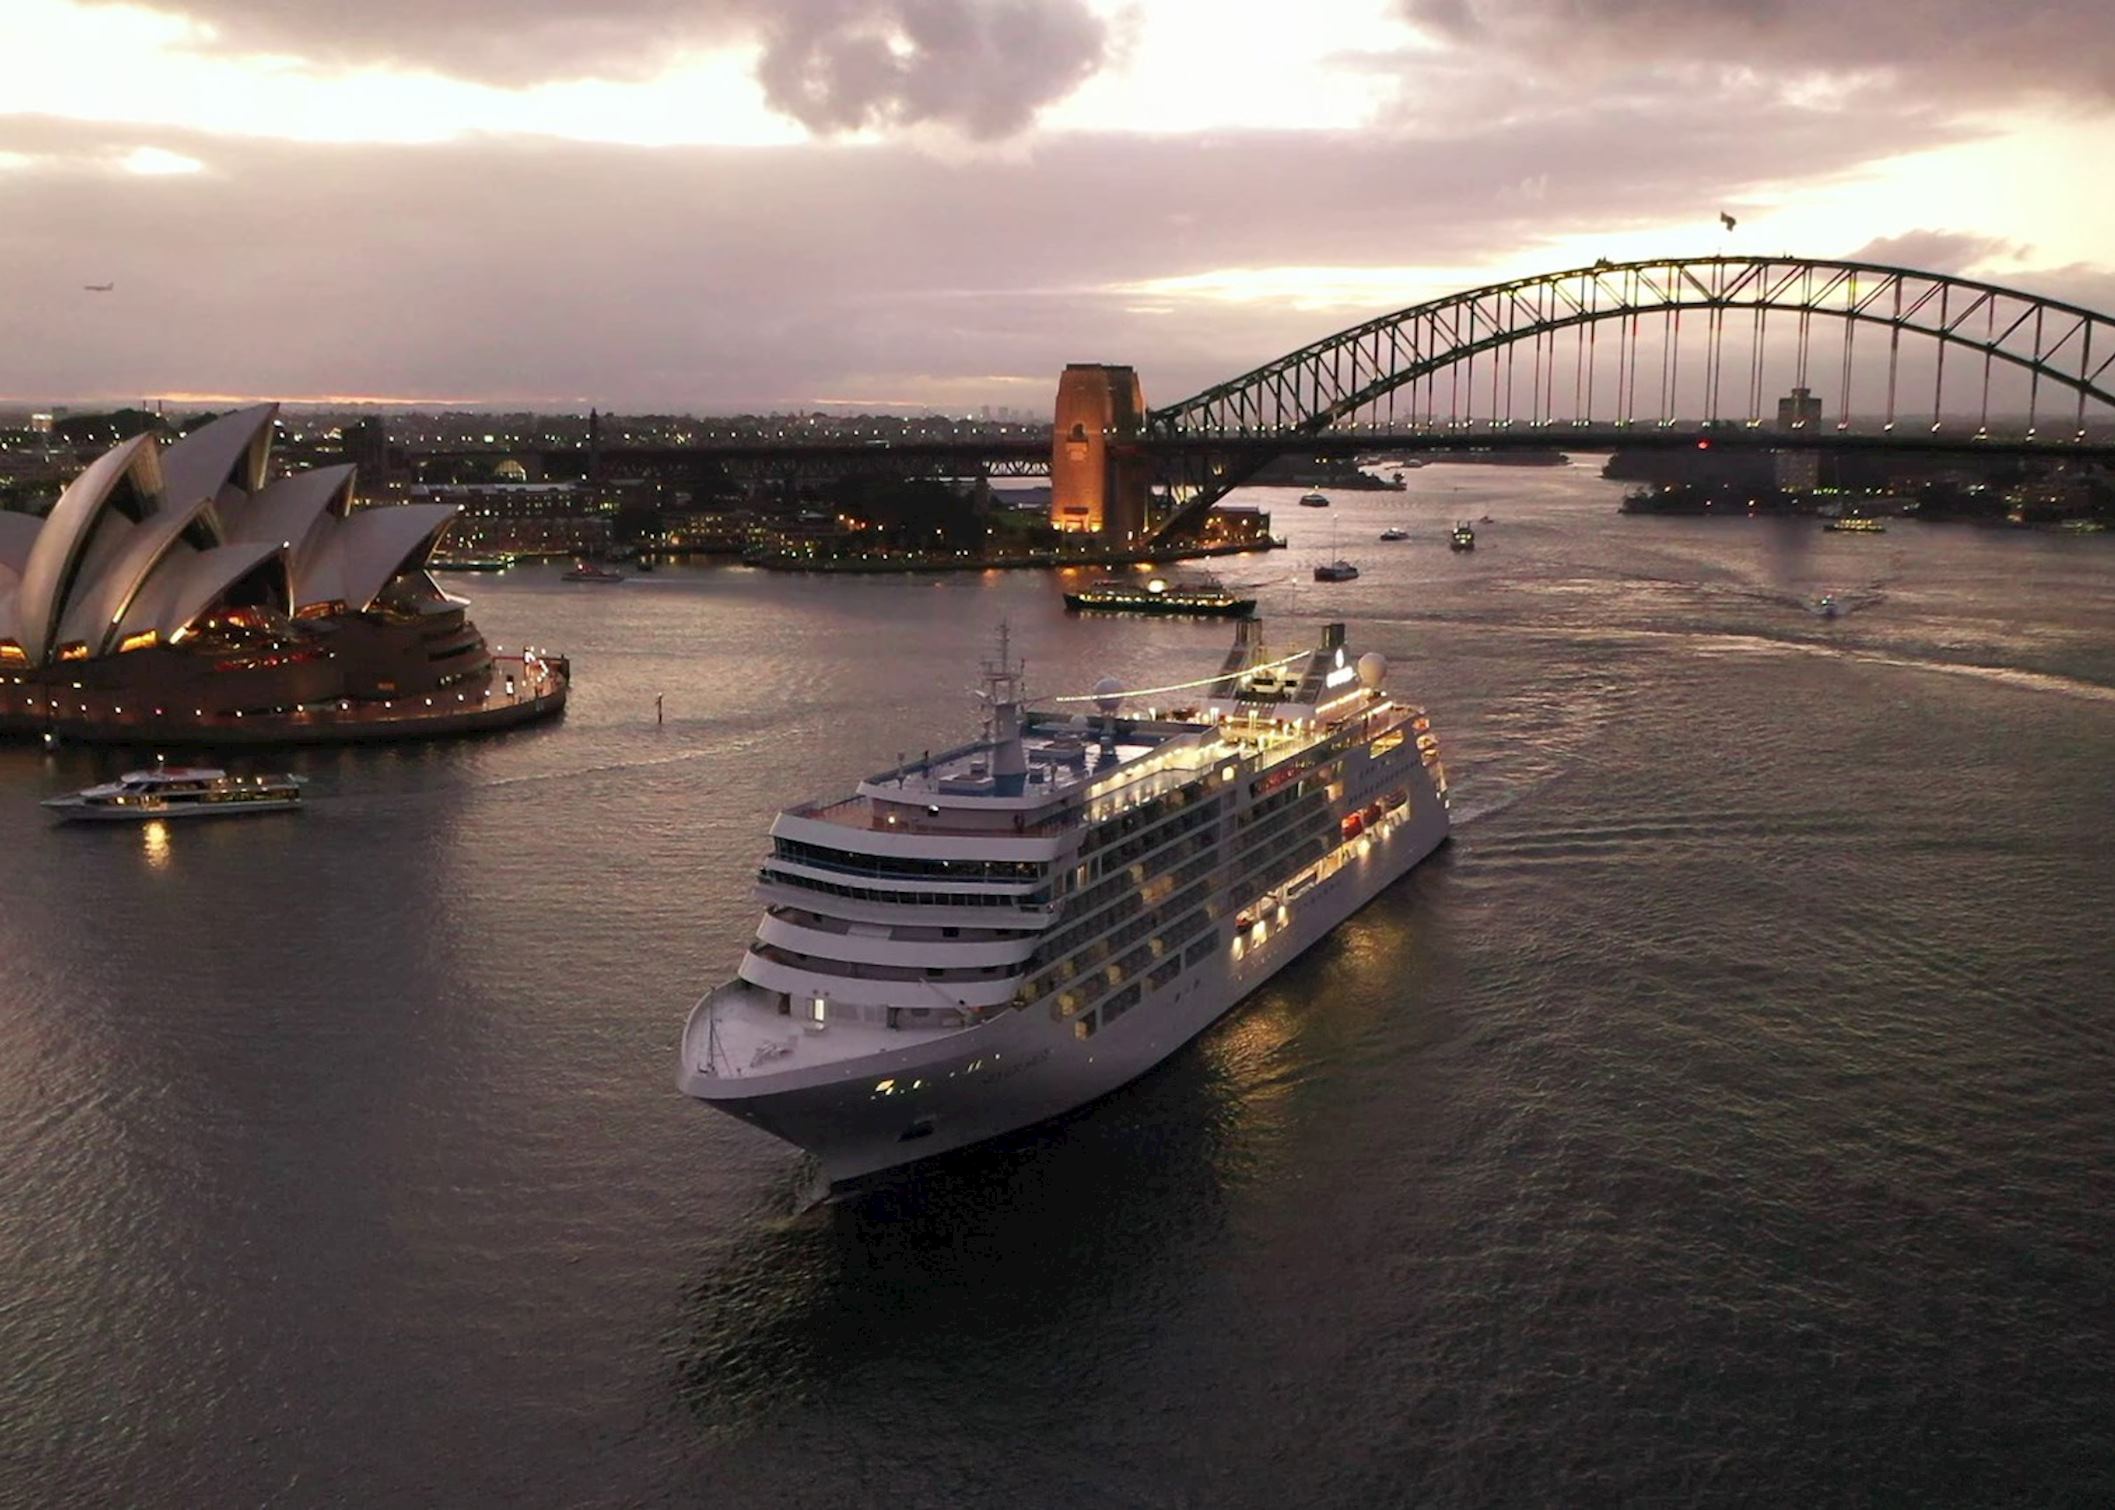 cruise ship sydney to auckland